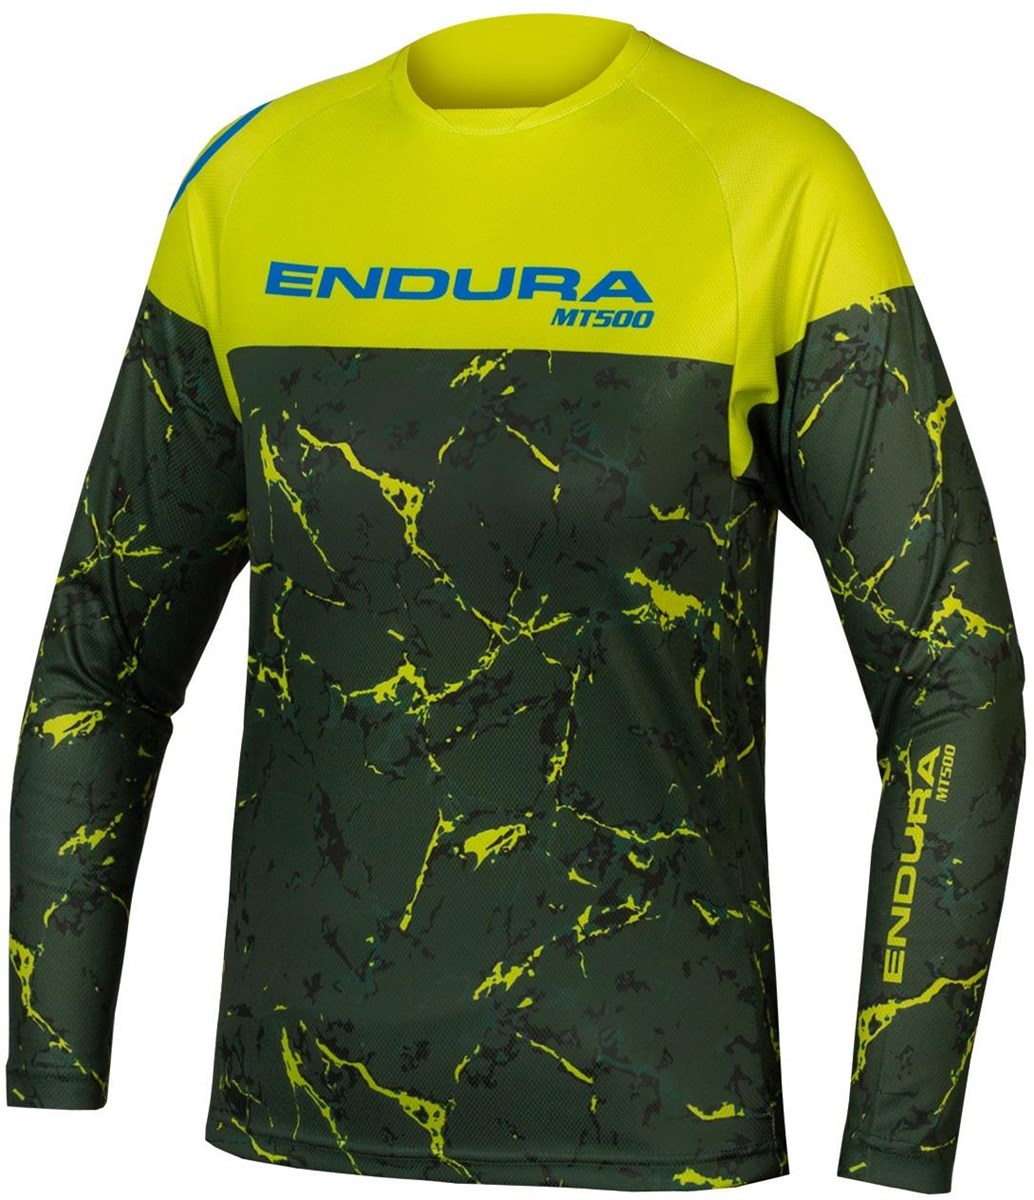 Endura MT500JR LTD Kids Long Sleeve Jersey product image